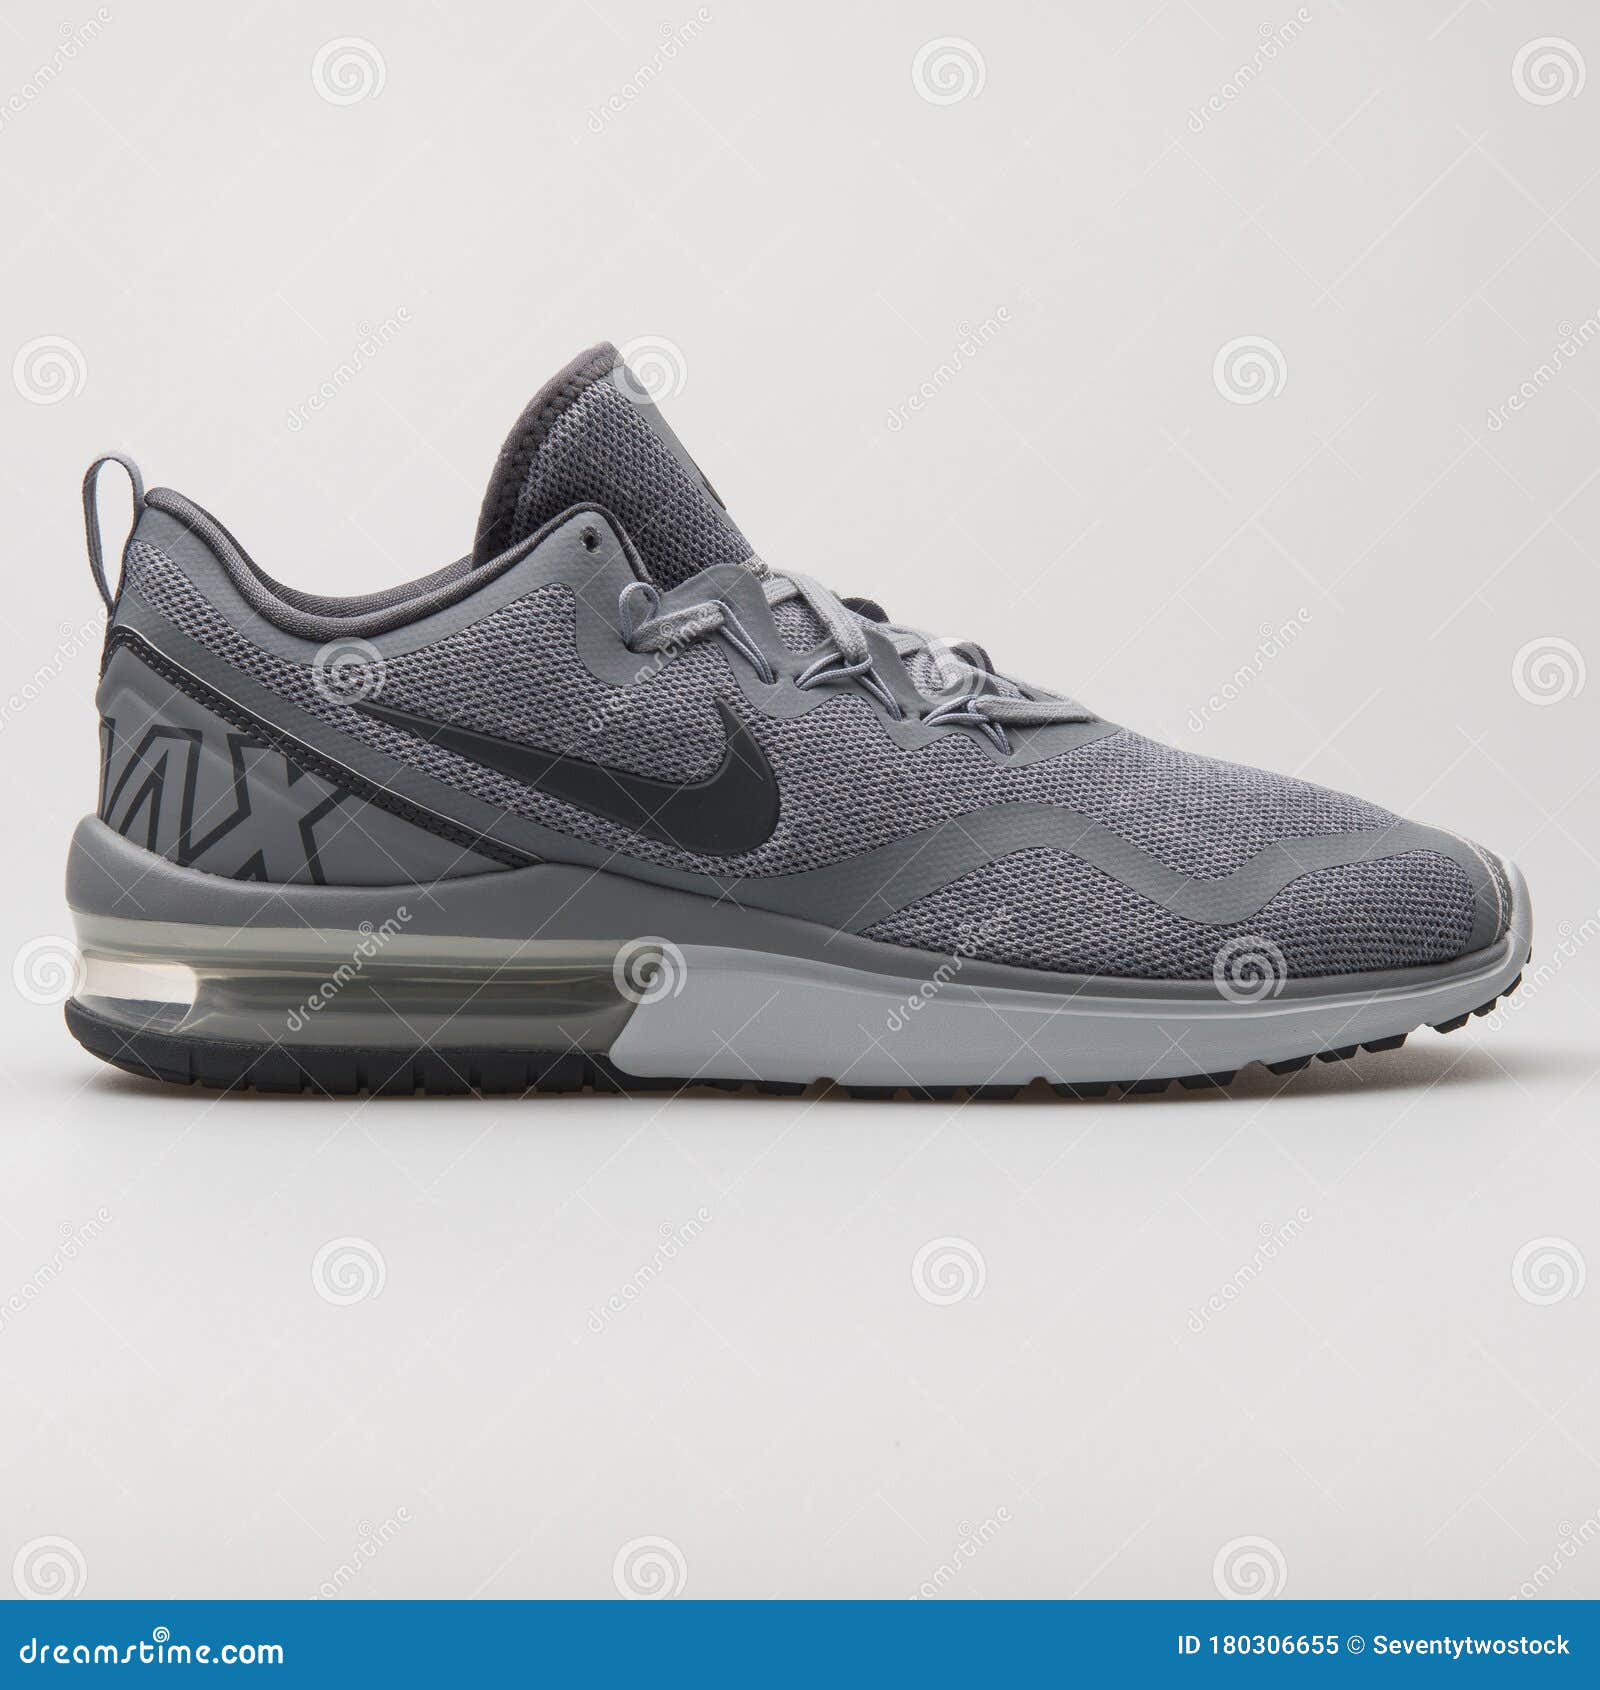 Air Max Furia Gris Sneaker Imagen editorial Imagen de producto, calzado: 180306655